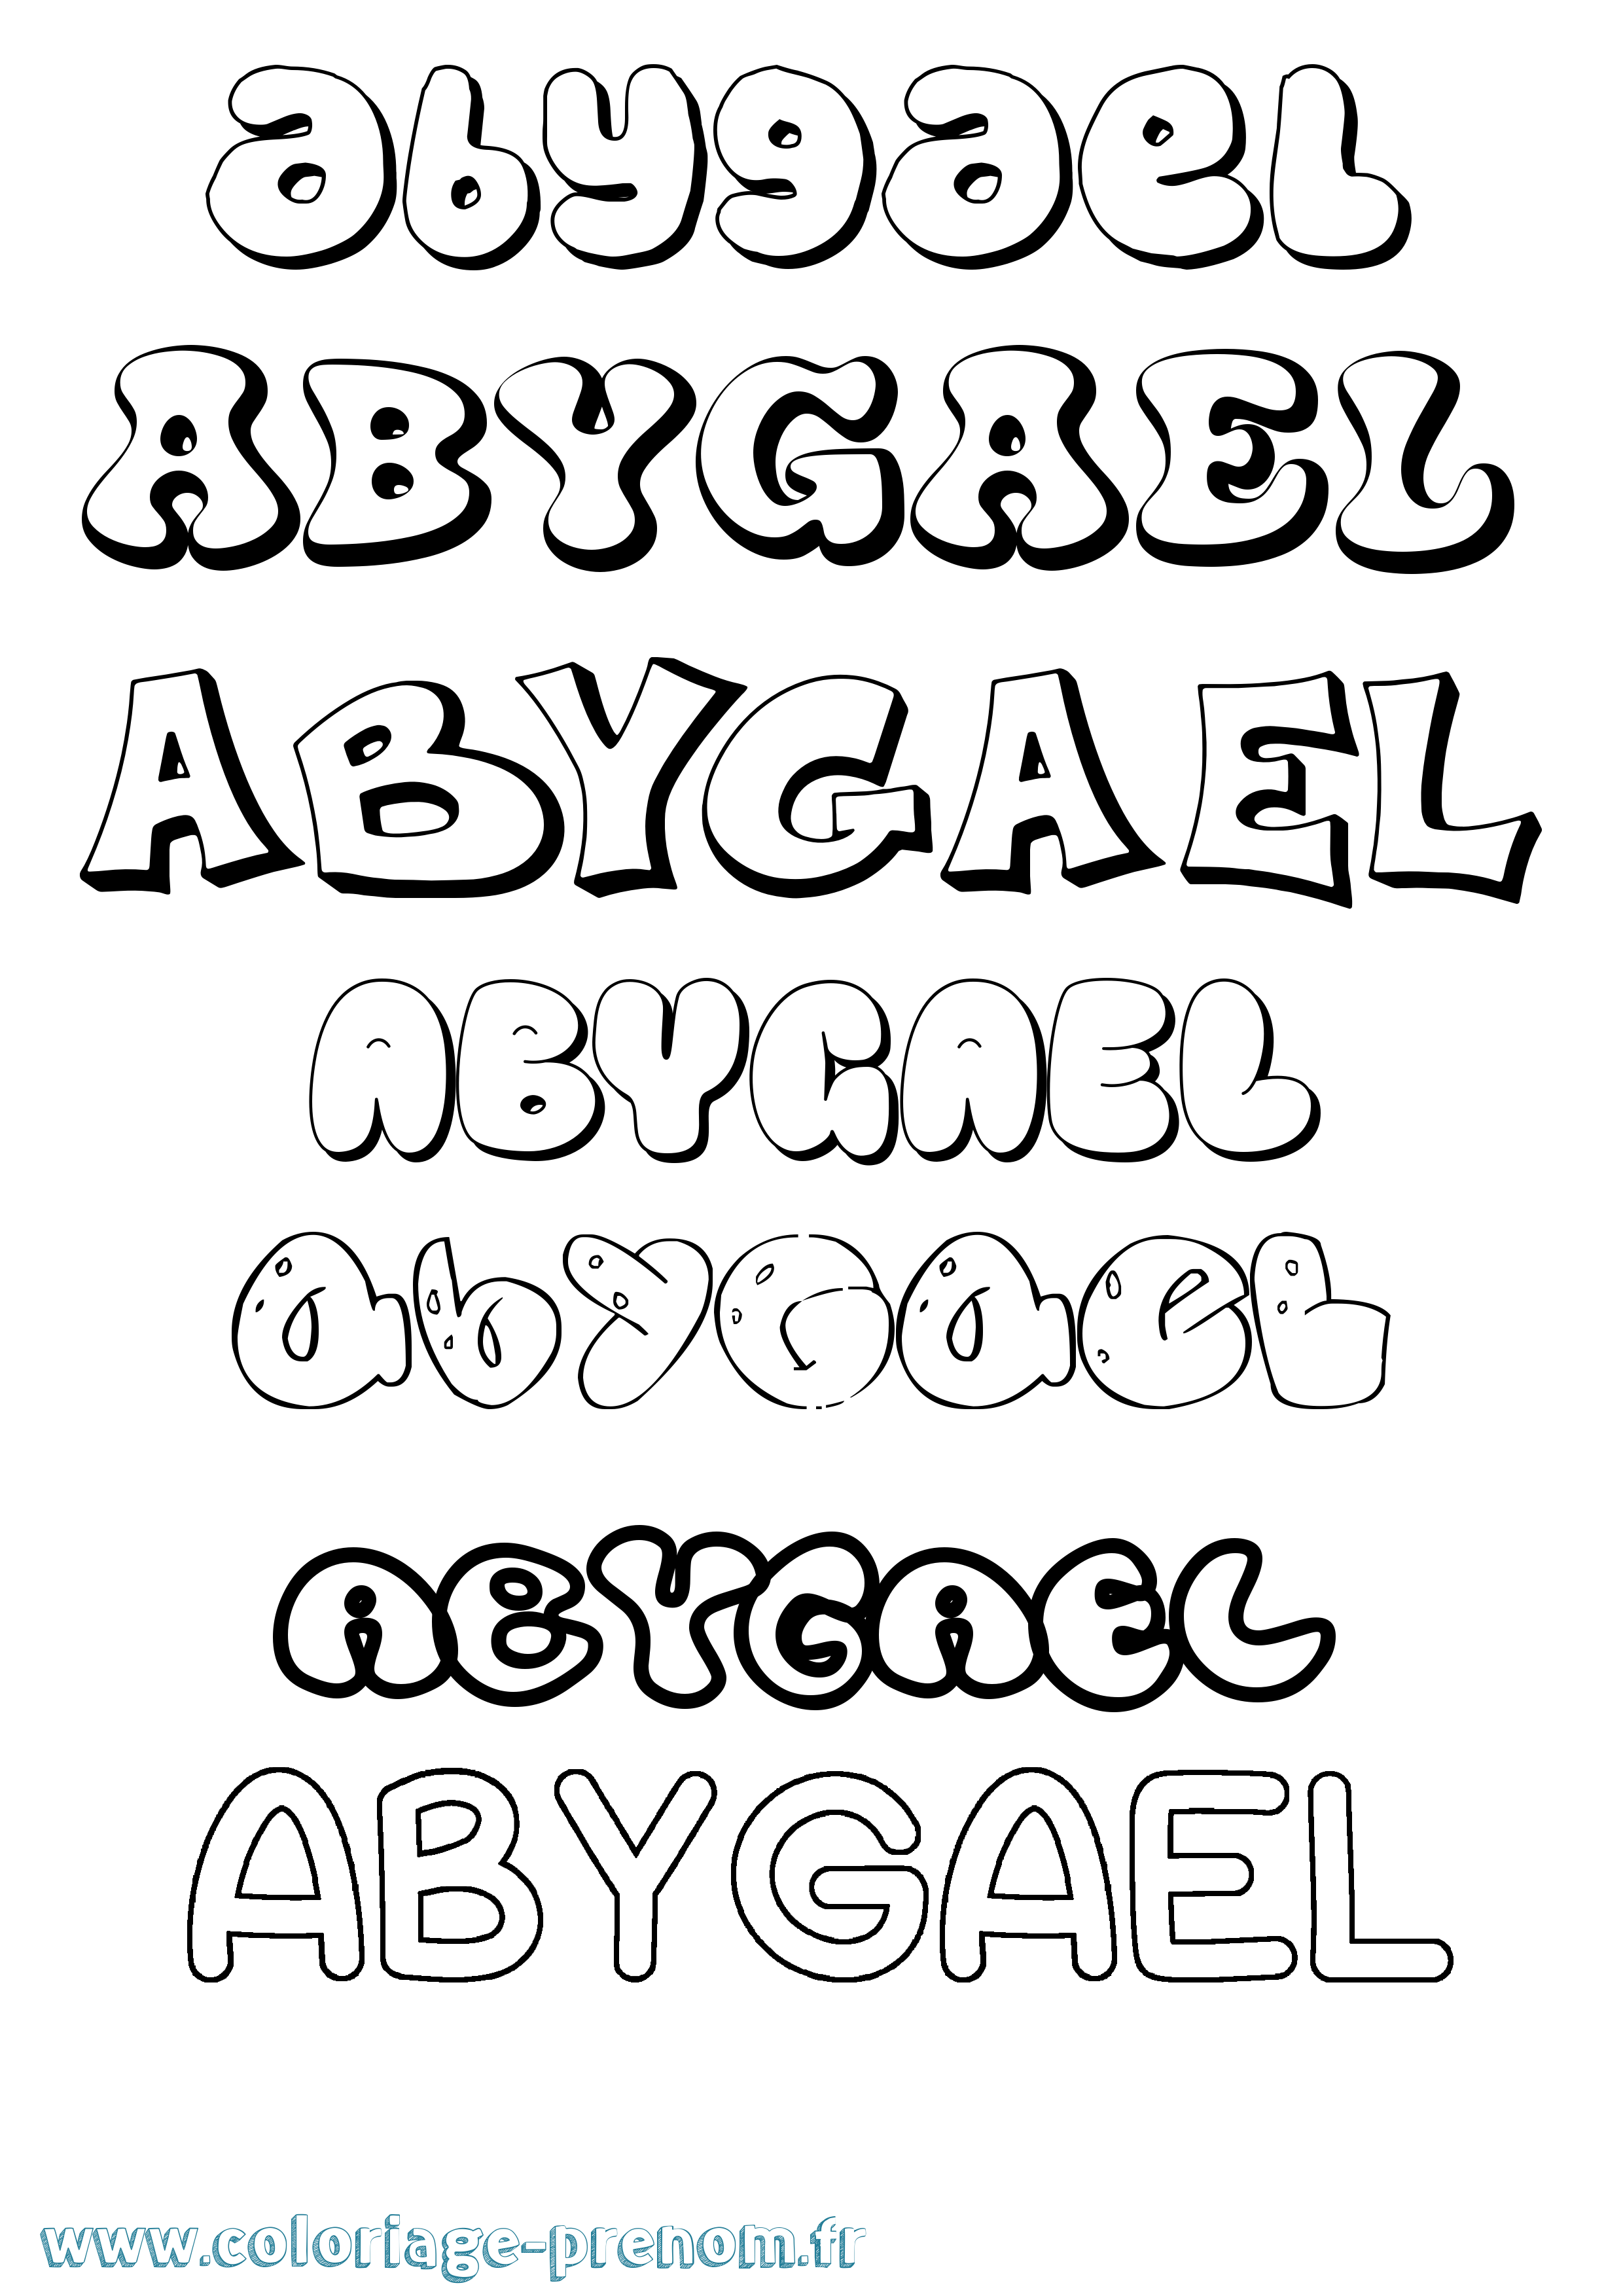 Coloriage prénom Abygael Bubble